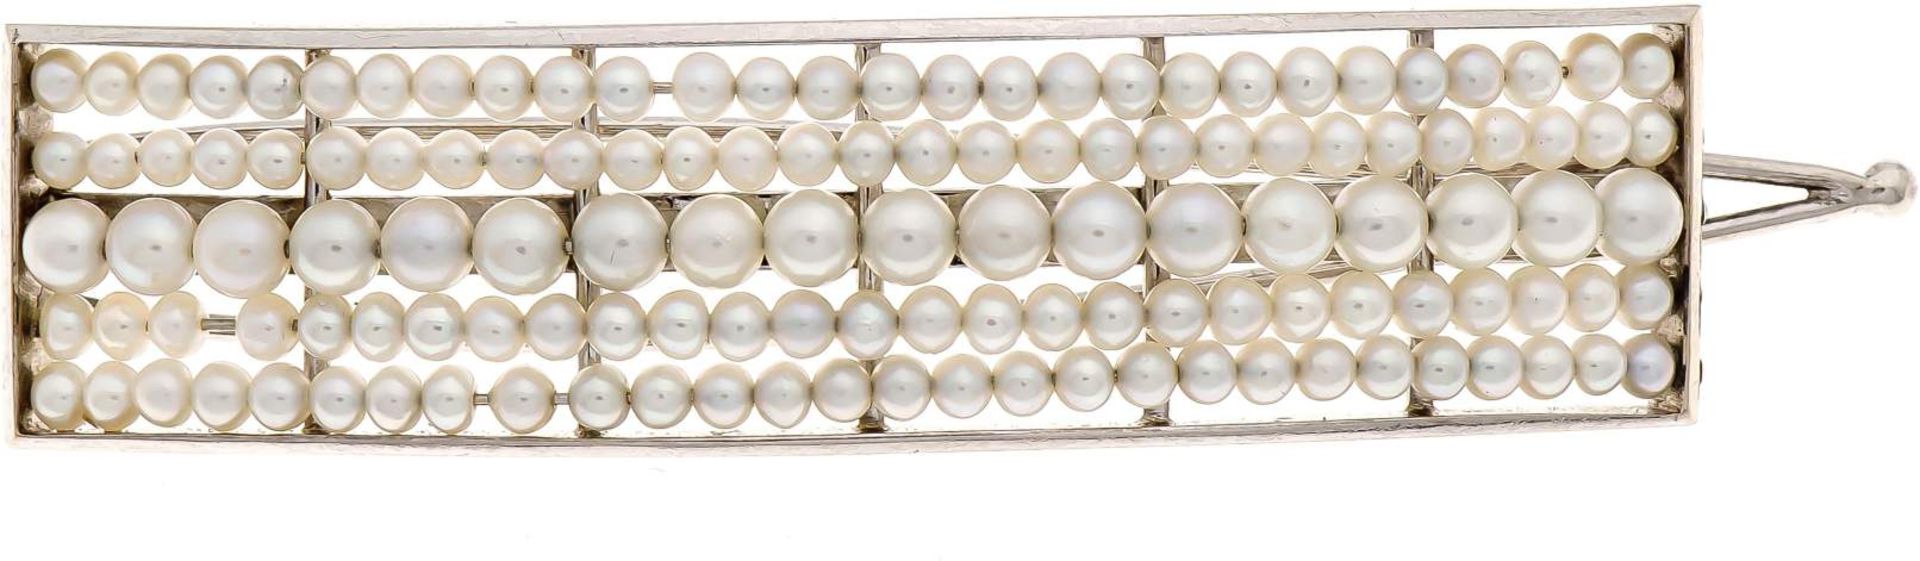 Haar-Nadel WG 750/000 mit Perlen 3,5 - 1,5 mm, L. 60 mm, 14,2 gMindestpreis: 200 EUR